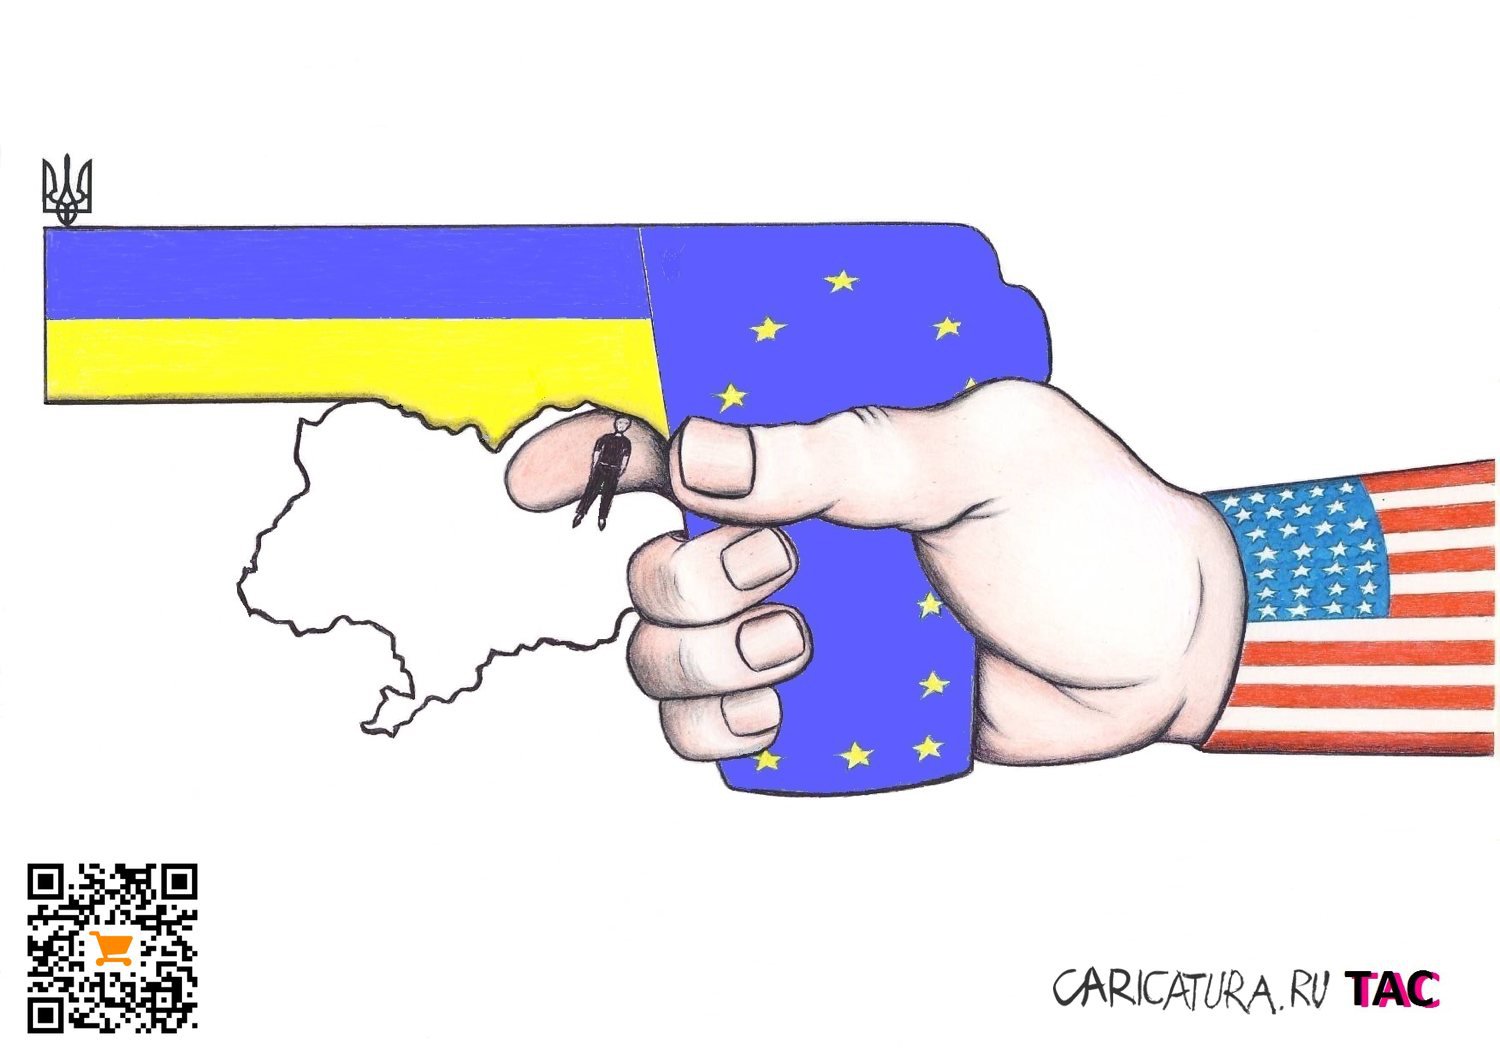 Карикатура "Пистолет в руке", Александр Троицкий